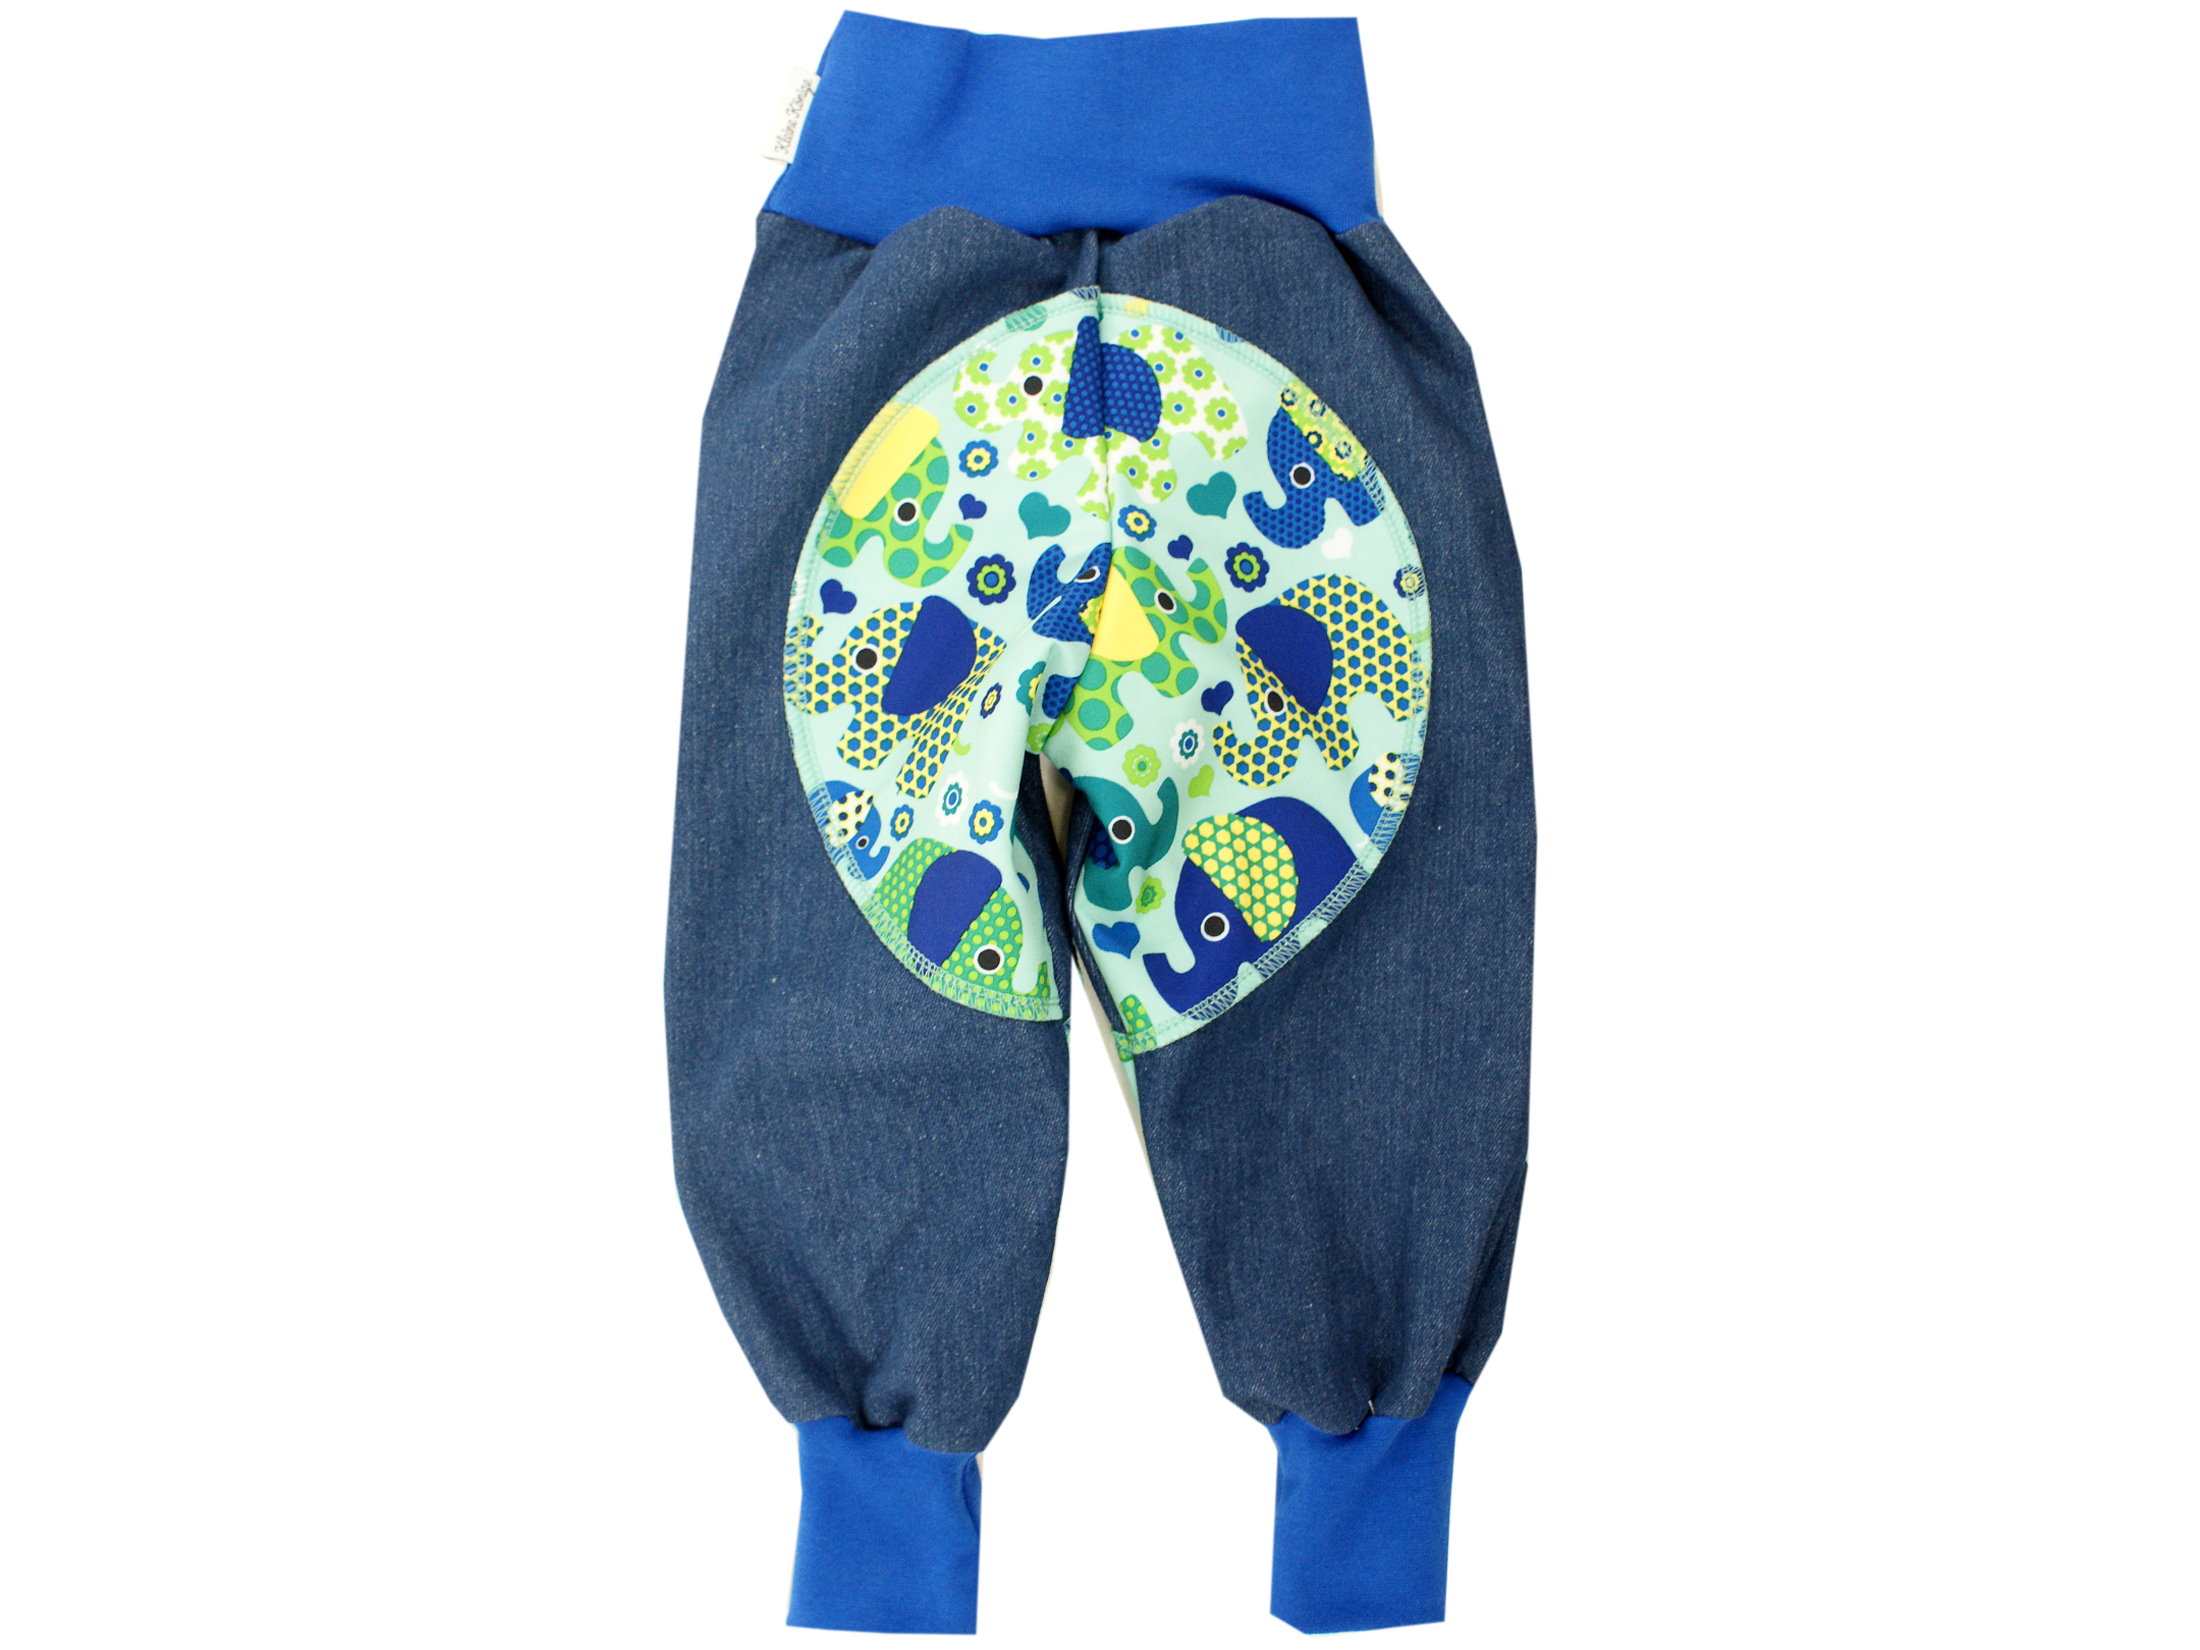 Kinder Outdoorhose Jeans Räuberhose "Elefantenparty" blau türkis